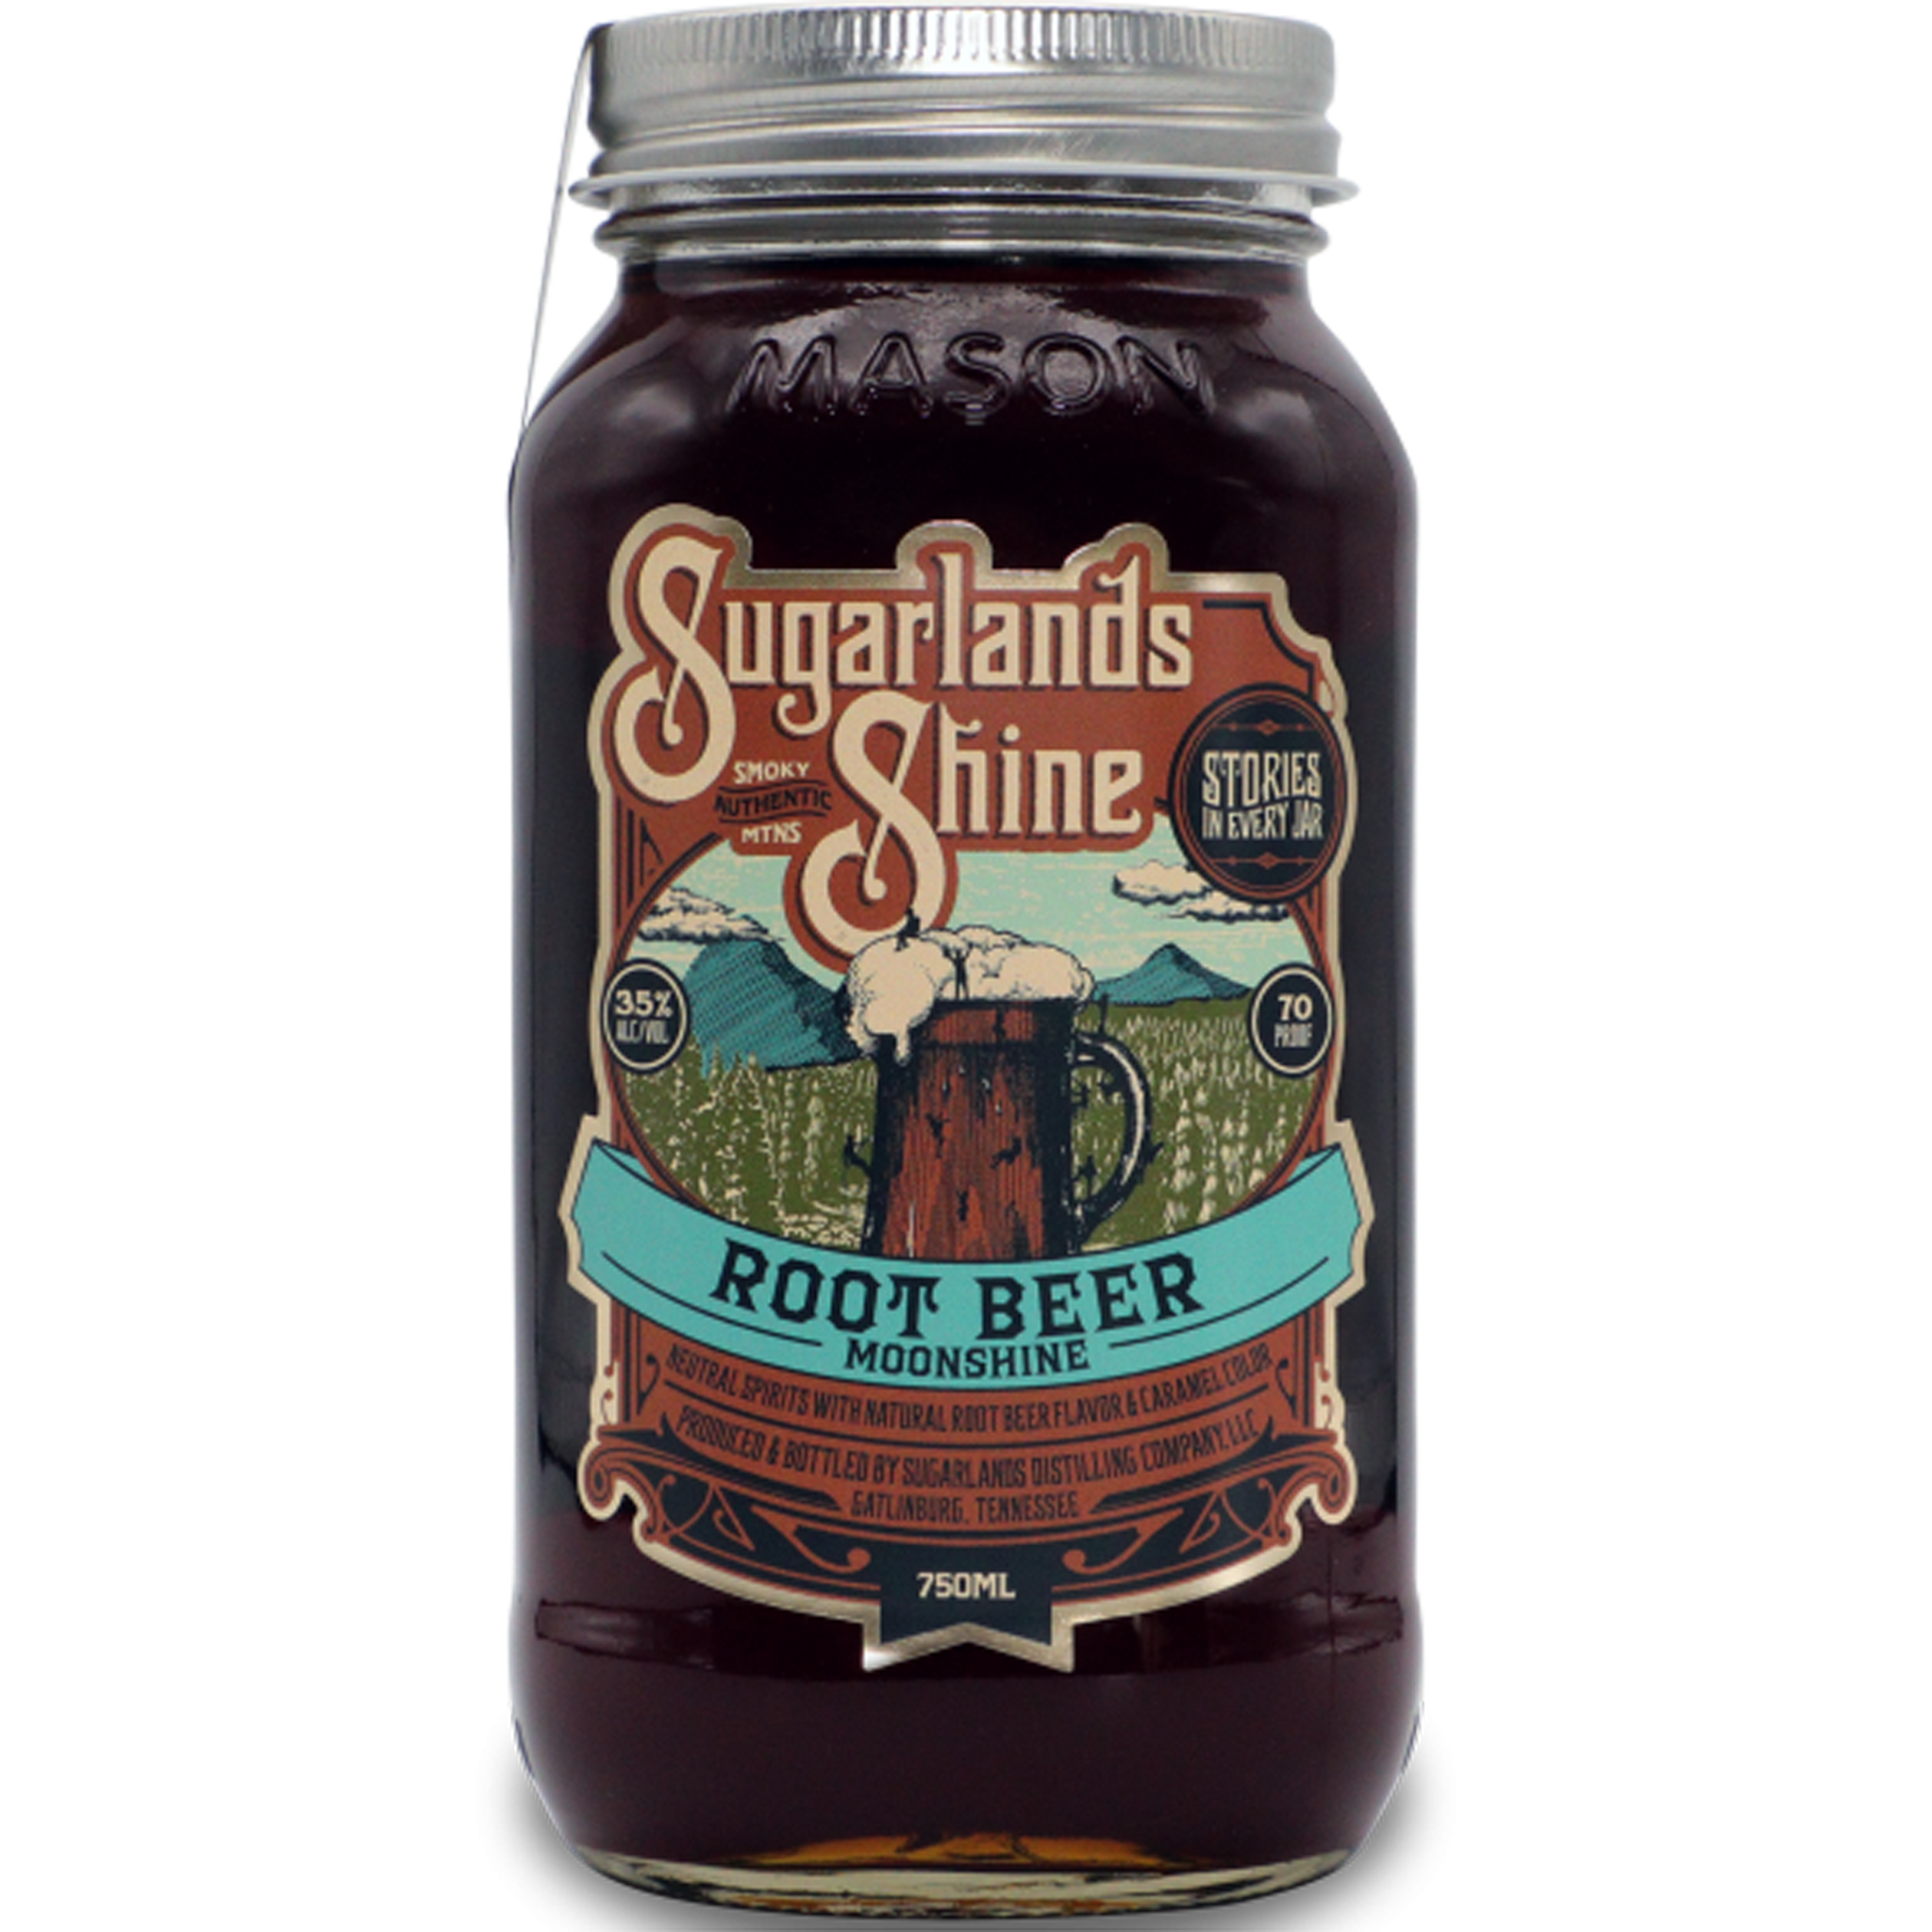 Sugarlands Shine Root Beer